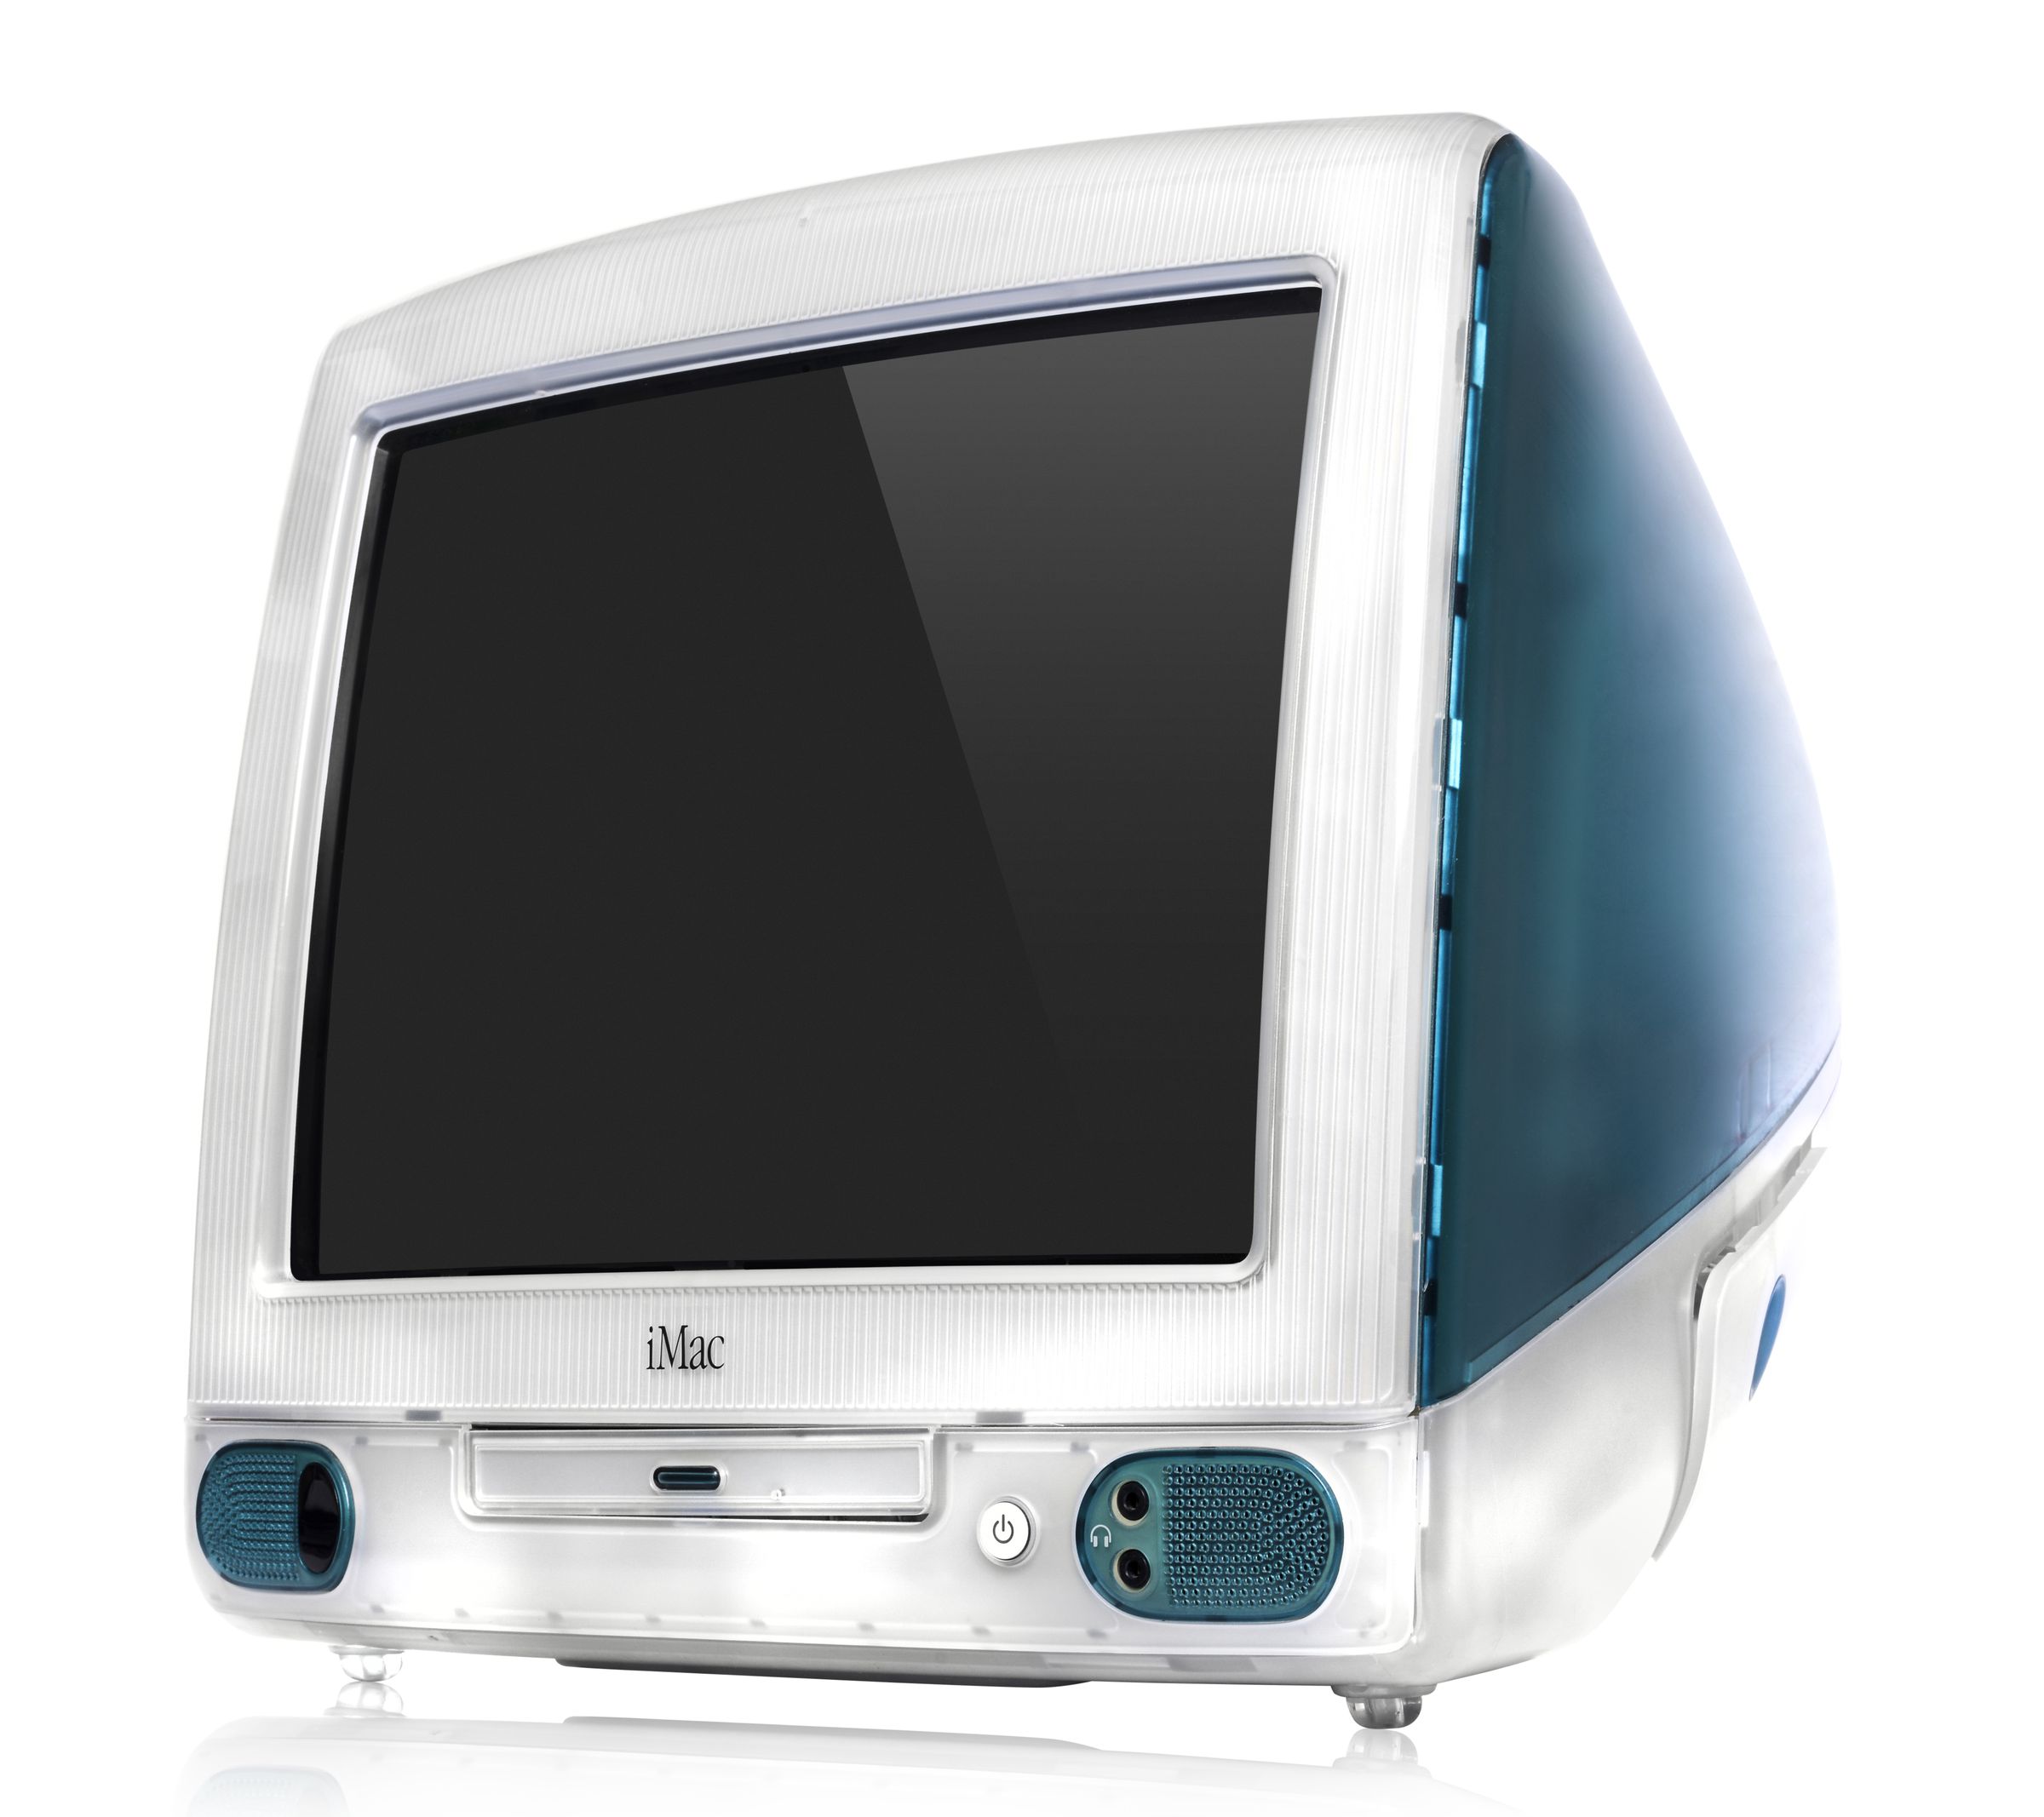 Apple iMac G3 (Bondi Blue) Hardware Shoot